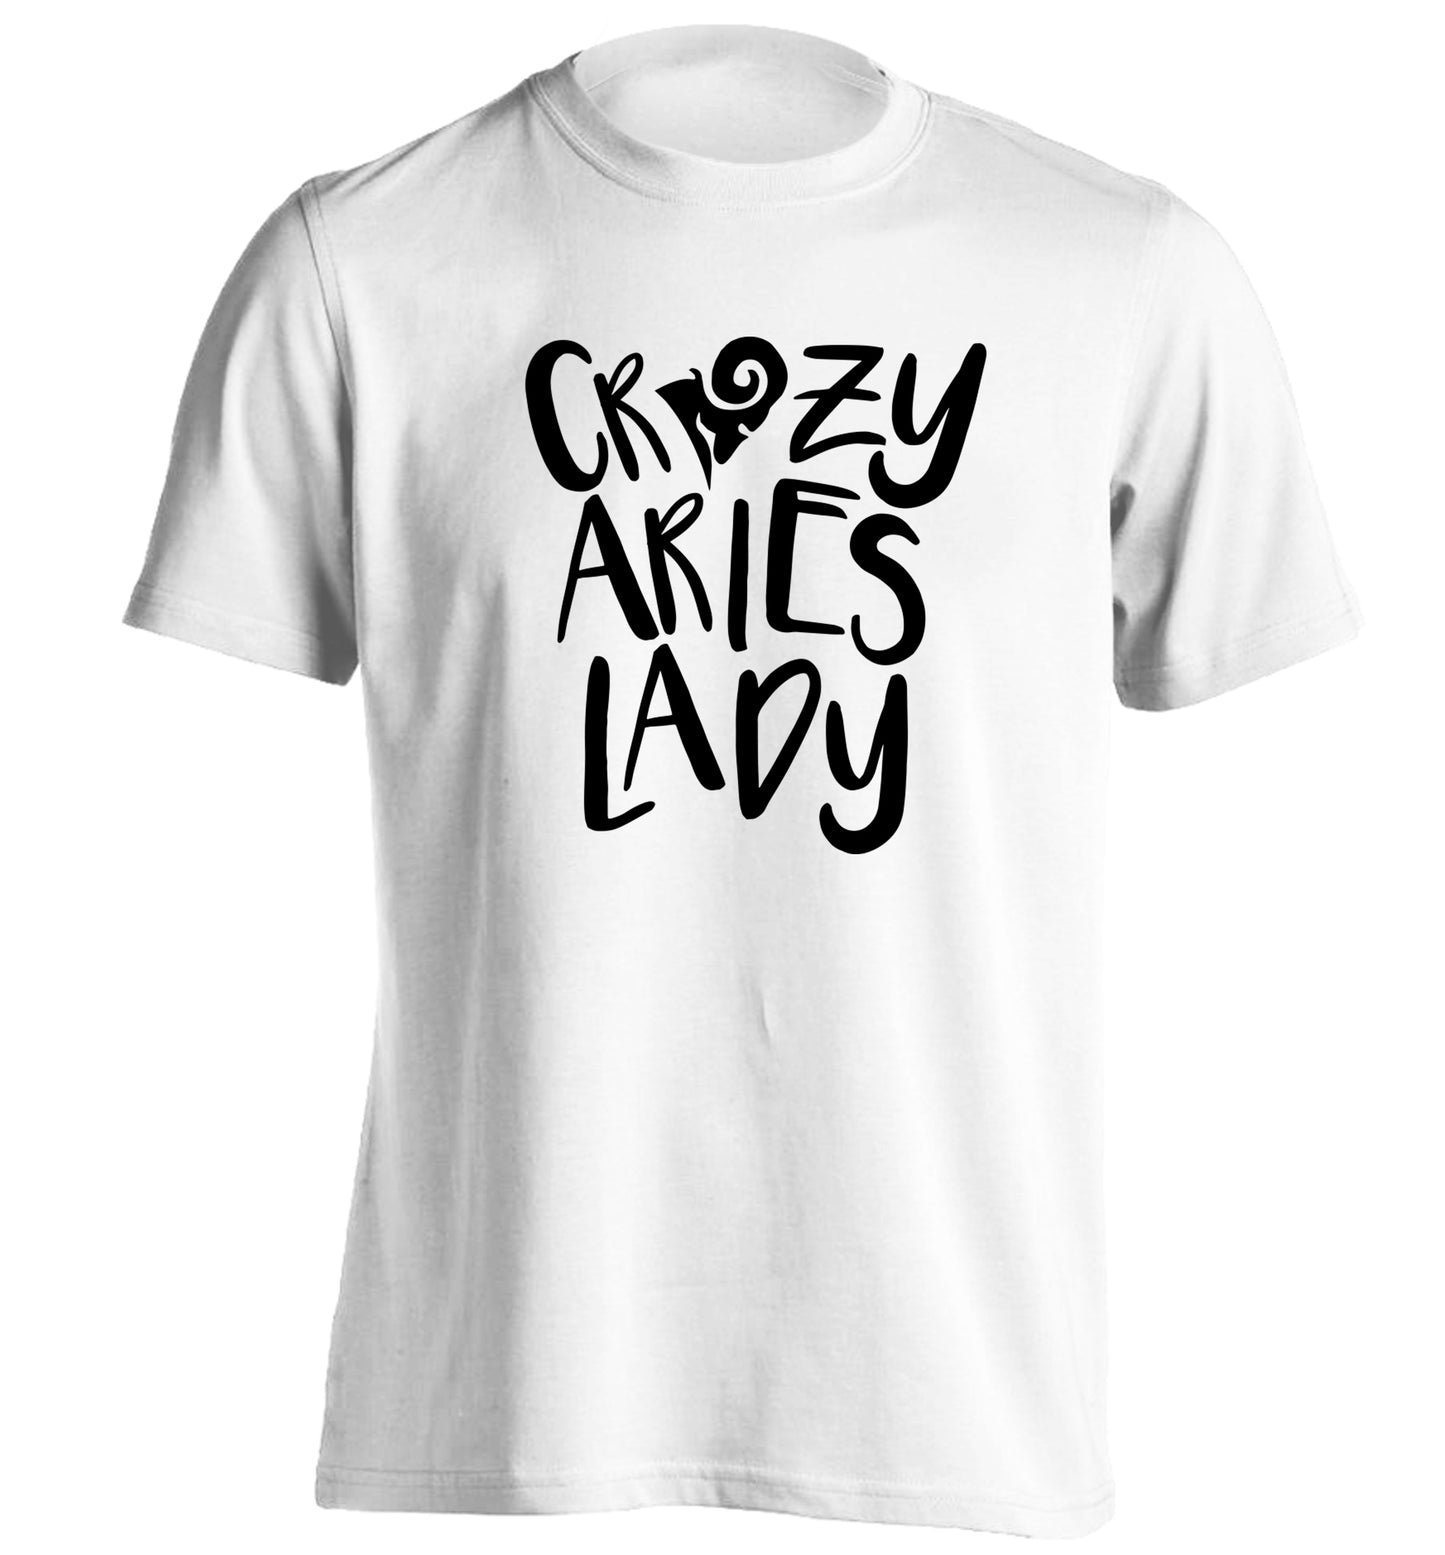 Crazy aries lady adults unisex white Tshirt 2XL